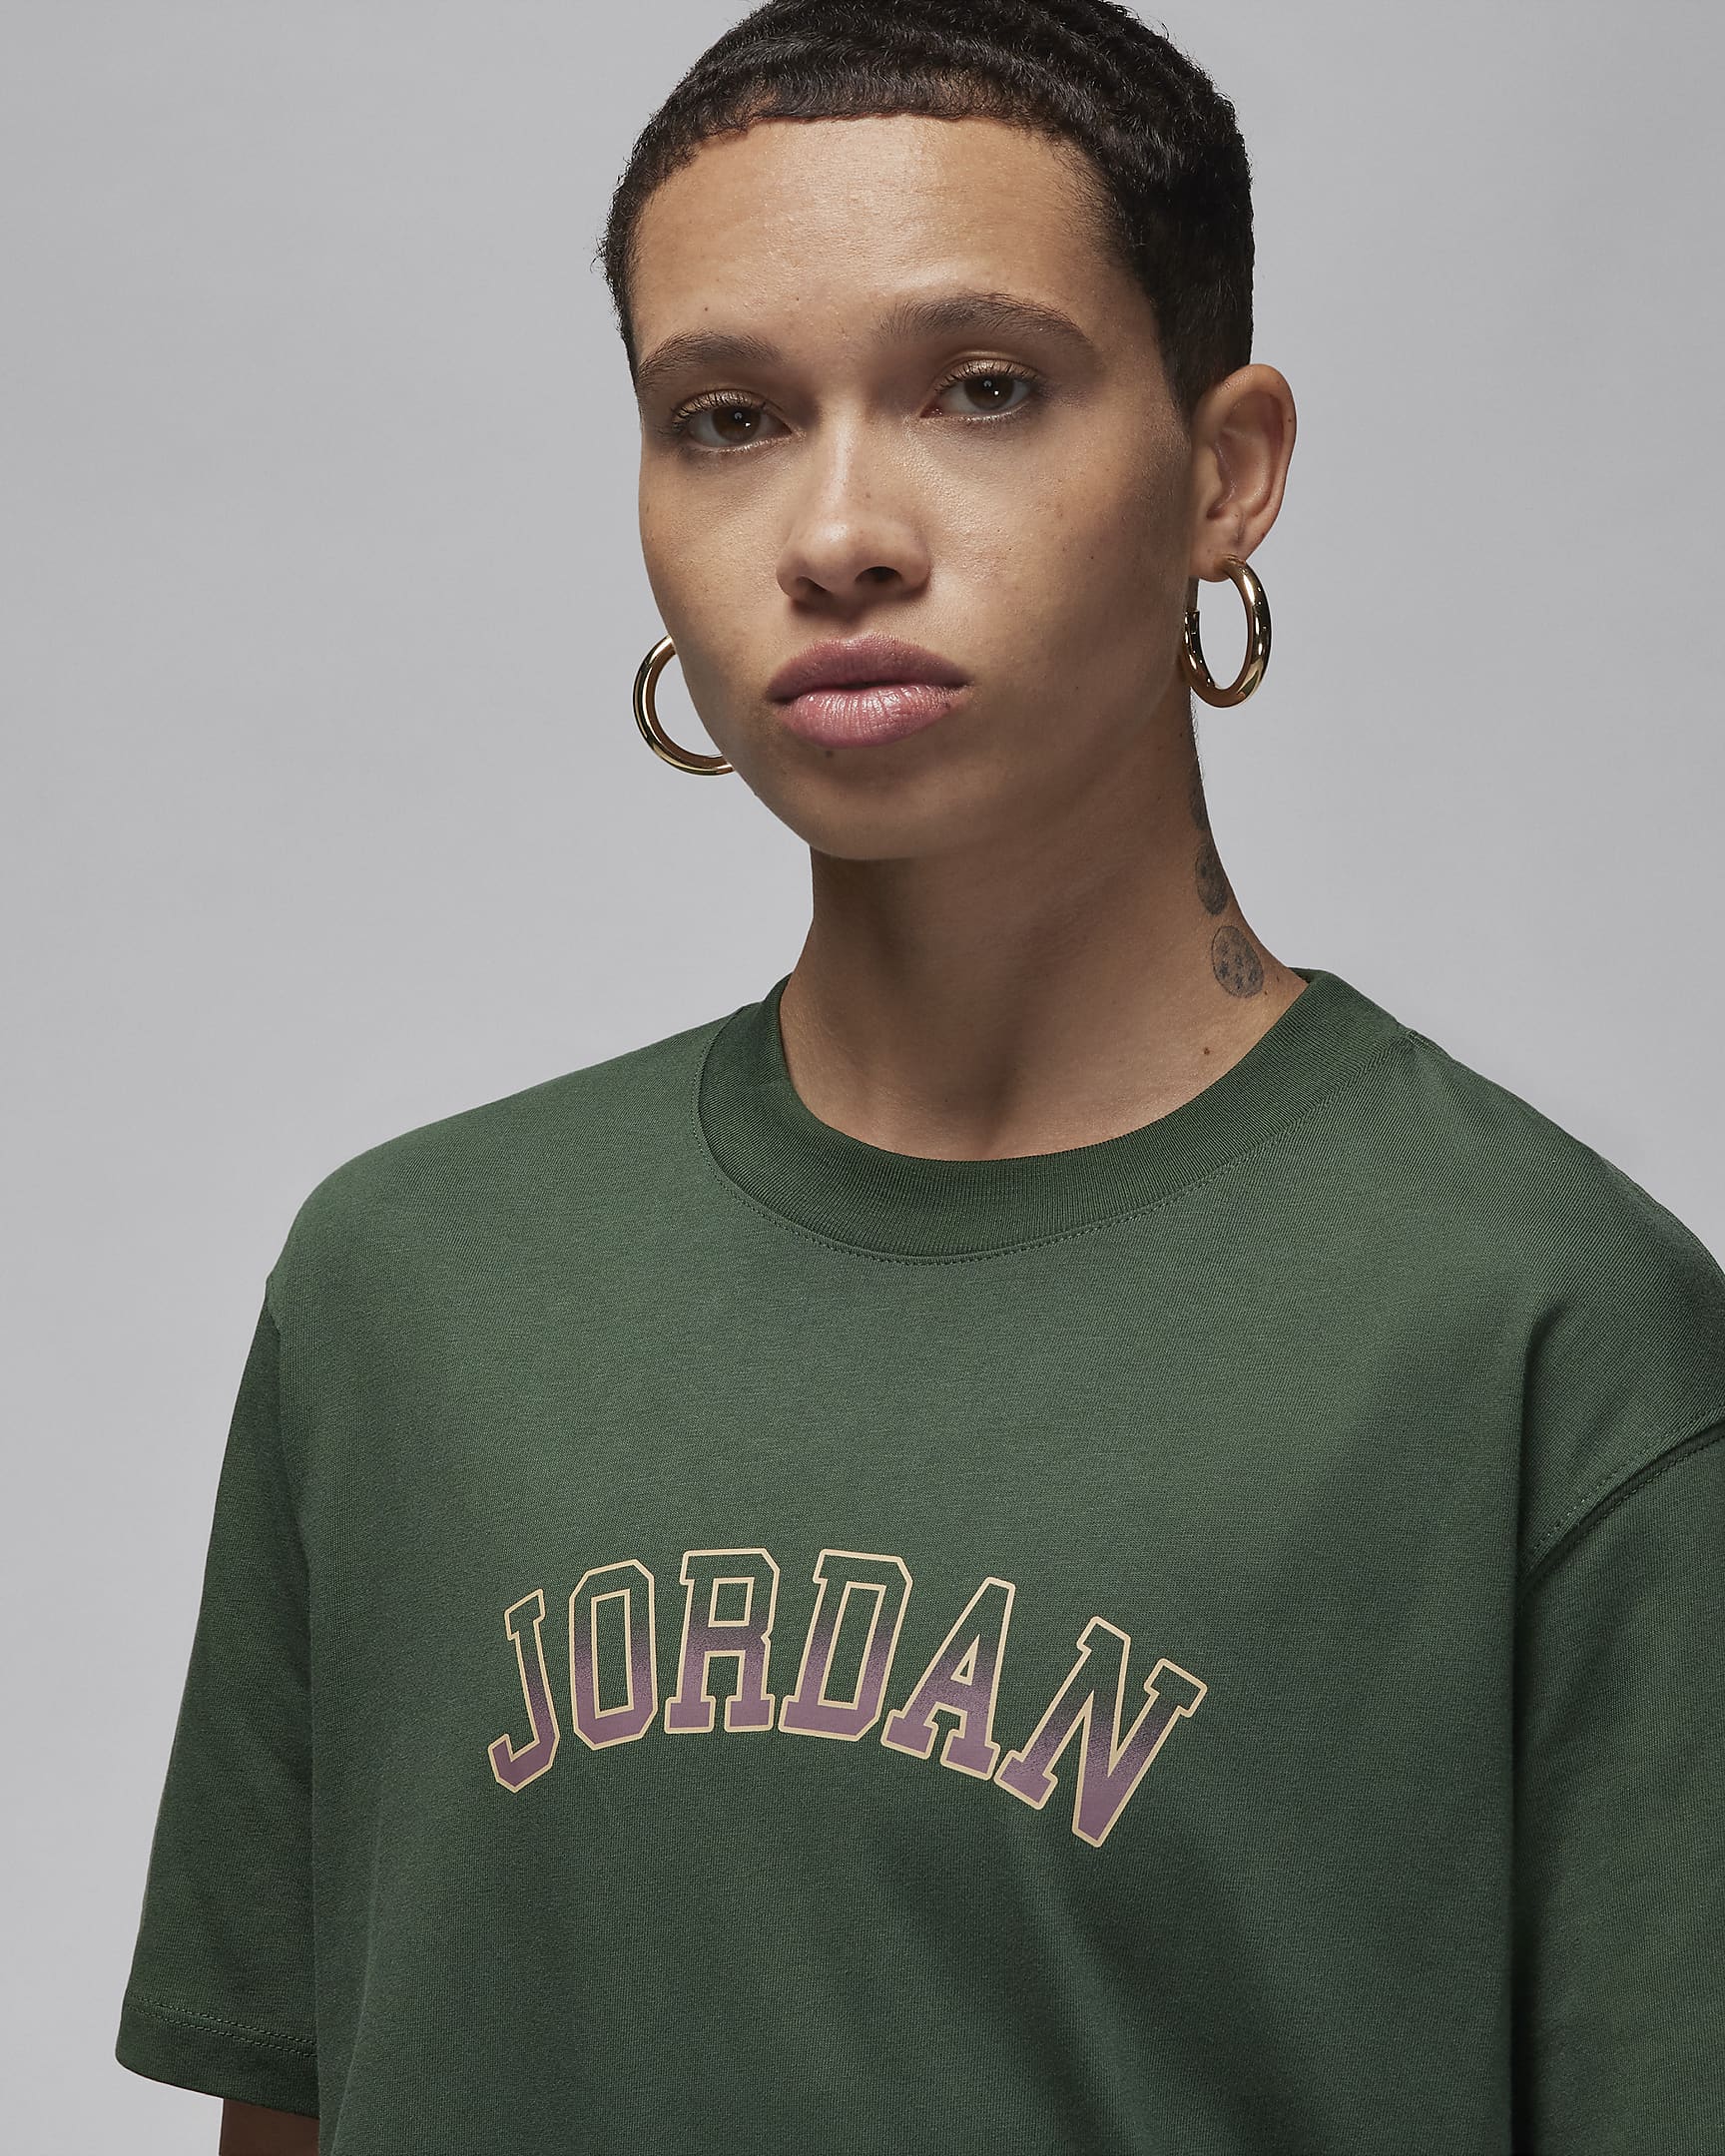 Jordan Women's Graphic T-Shirt - Galactic Jade/Sky J Mauve